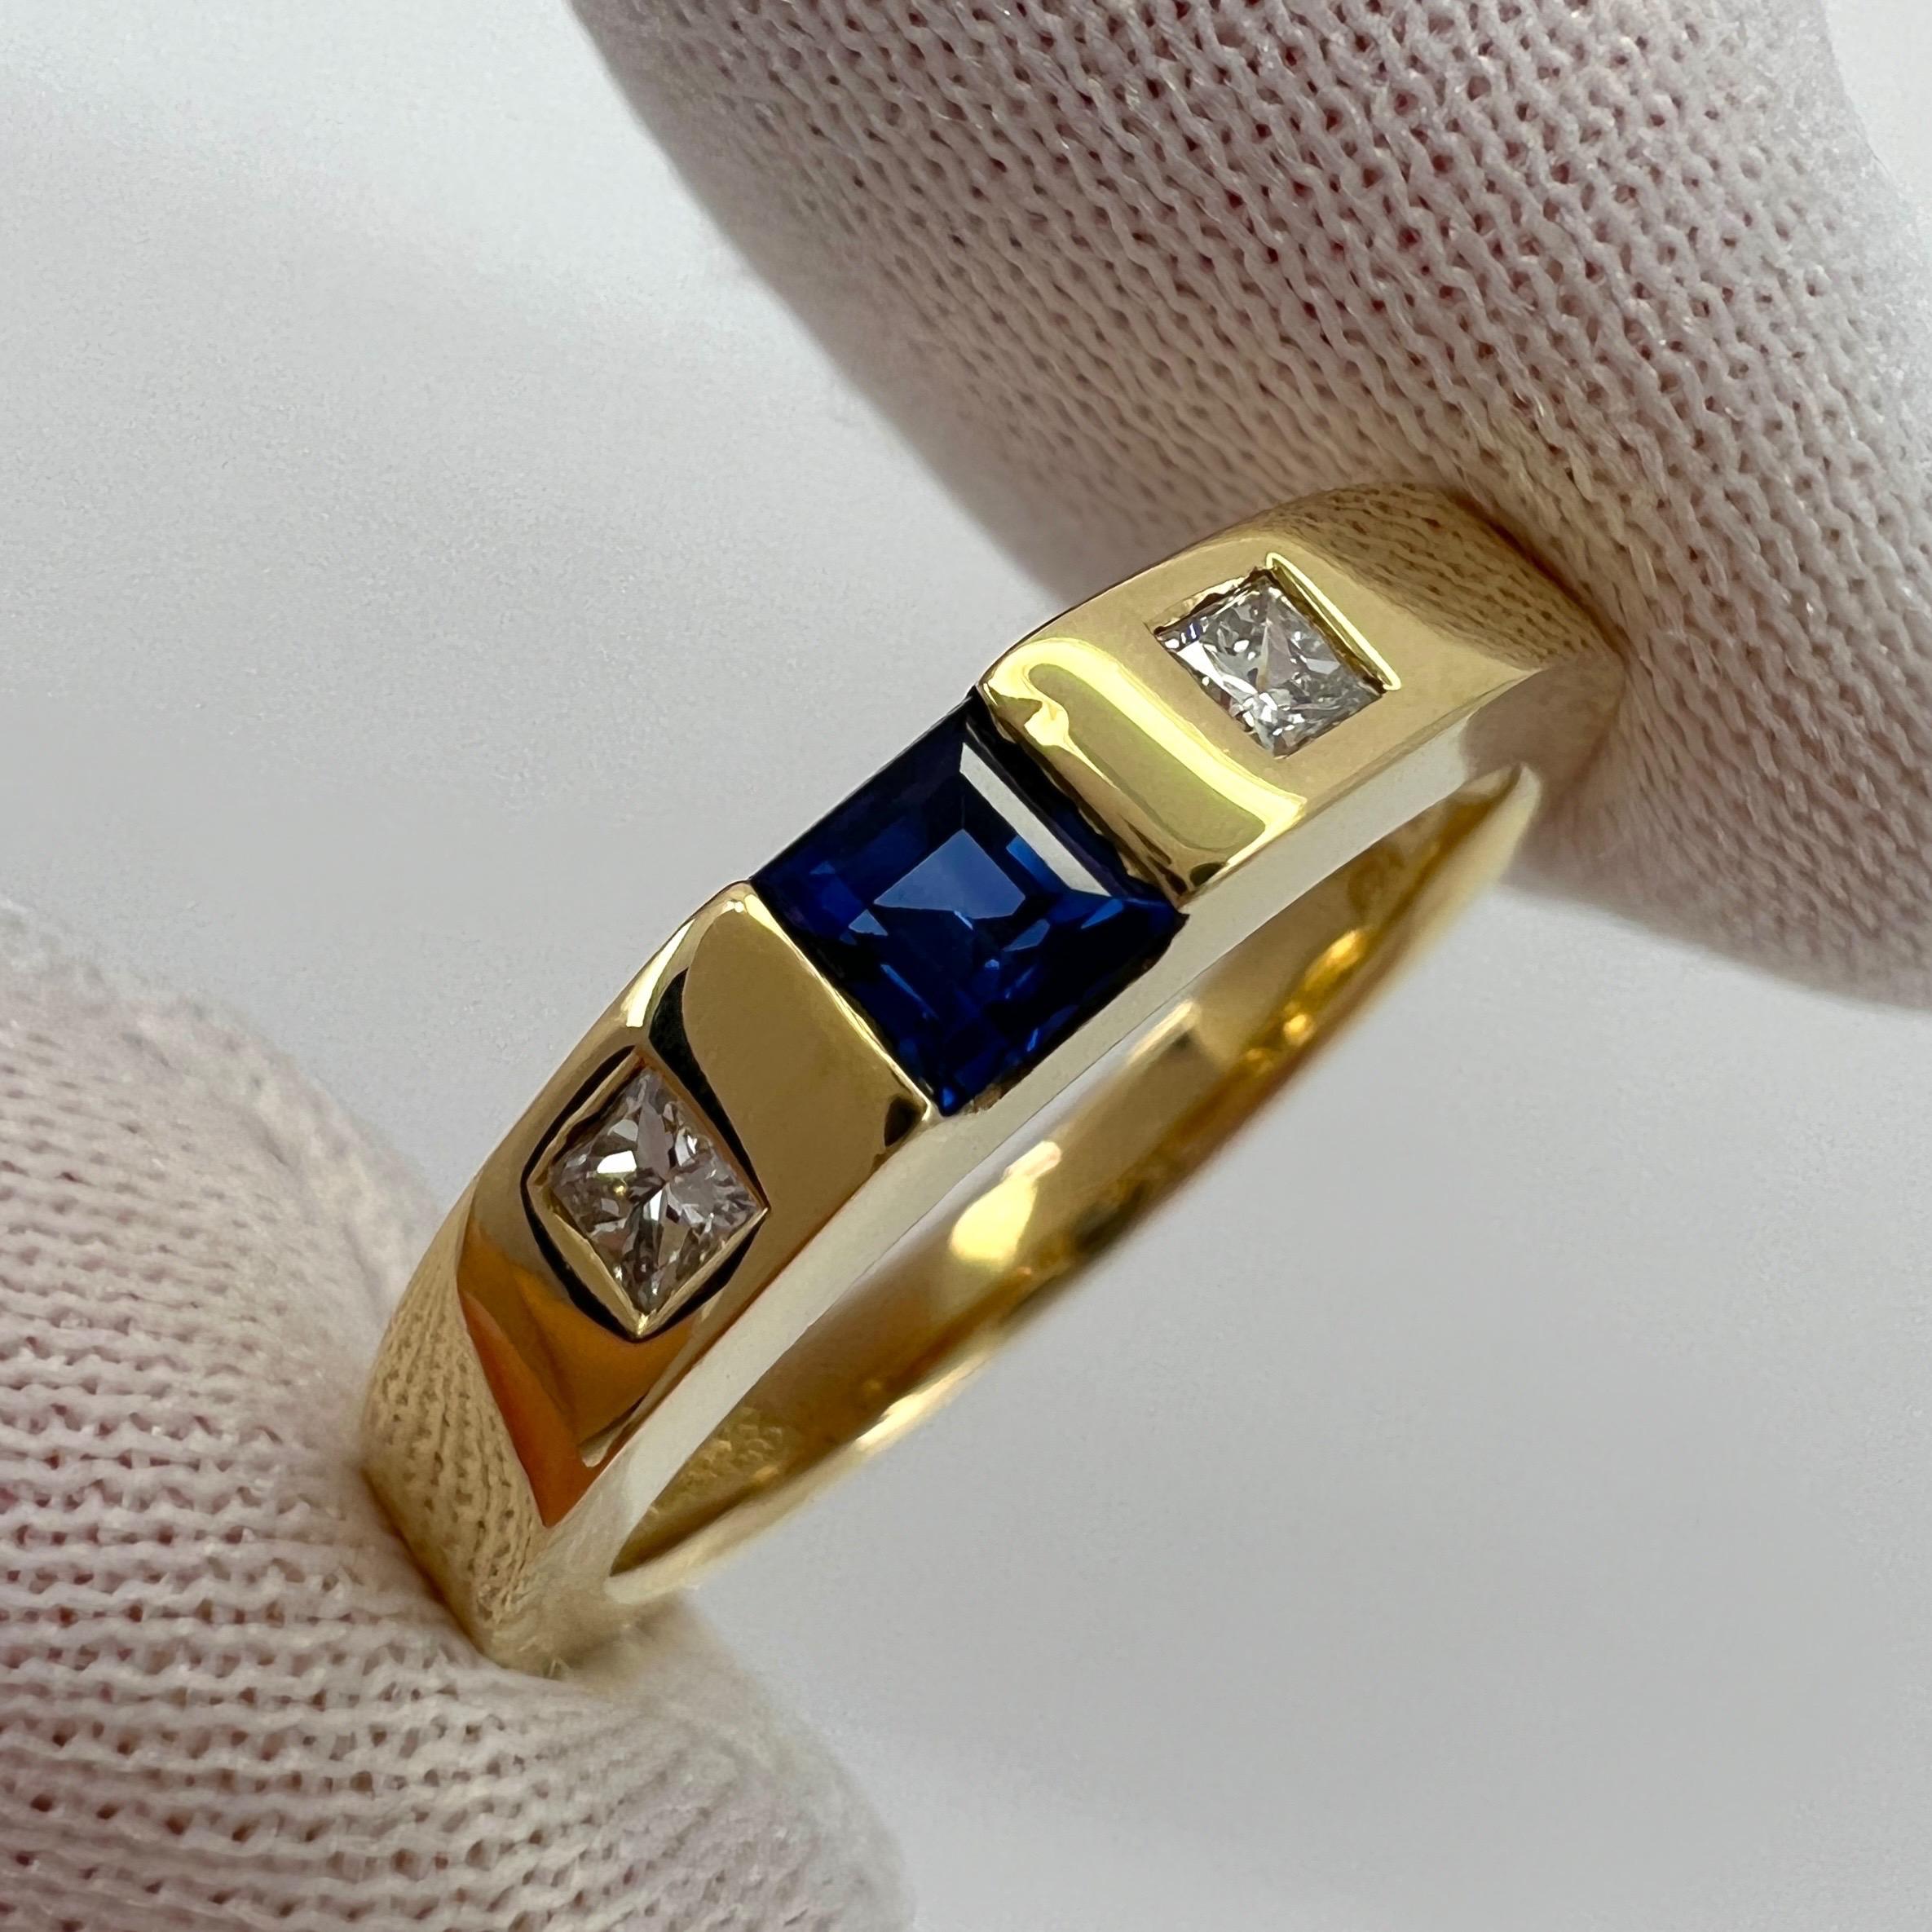 Tiffany & Co Fine Blue Sapphire & Diamond 18k Yellow Gold Three Stone Band Ring.

Stunning yellow gold ring set with a fine deep blue sapphire and 2 princess cut diamonds.

Fine jewellery houses like Tiffany only use the finest diamonds and